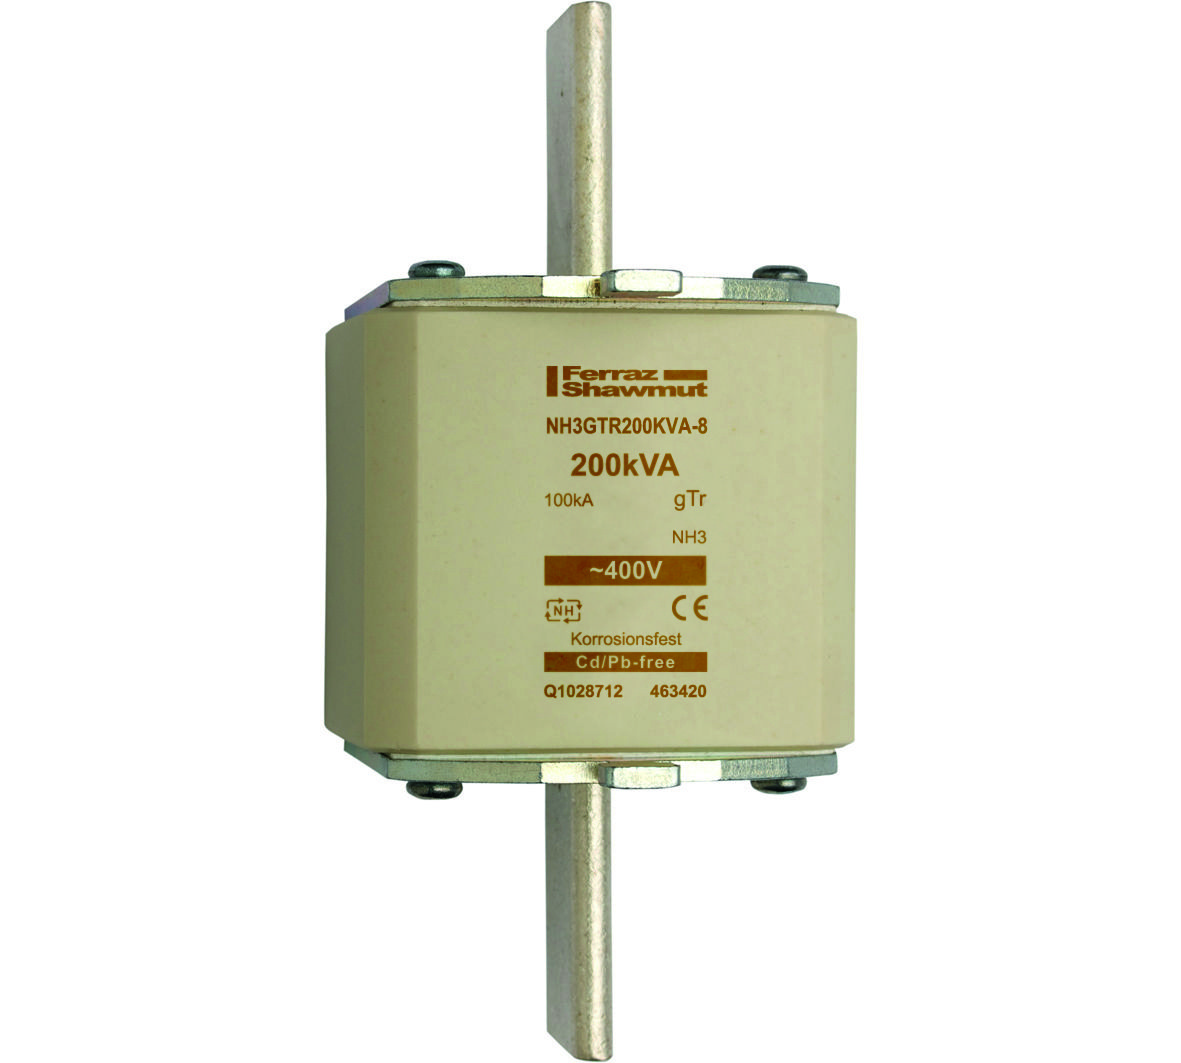 W1028717A - NH fuse-link gTr, 400VAC, size 3, 630KVA, top indicator/live tags